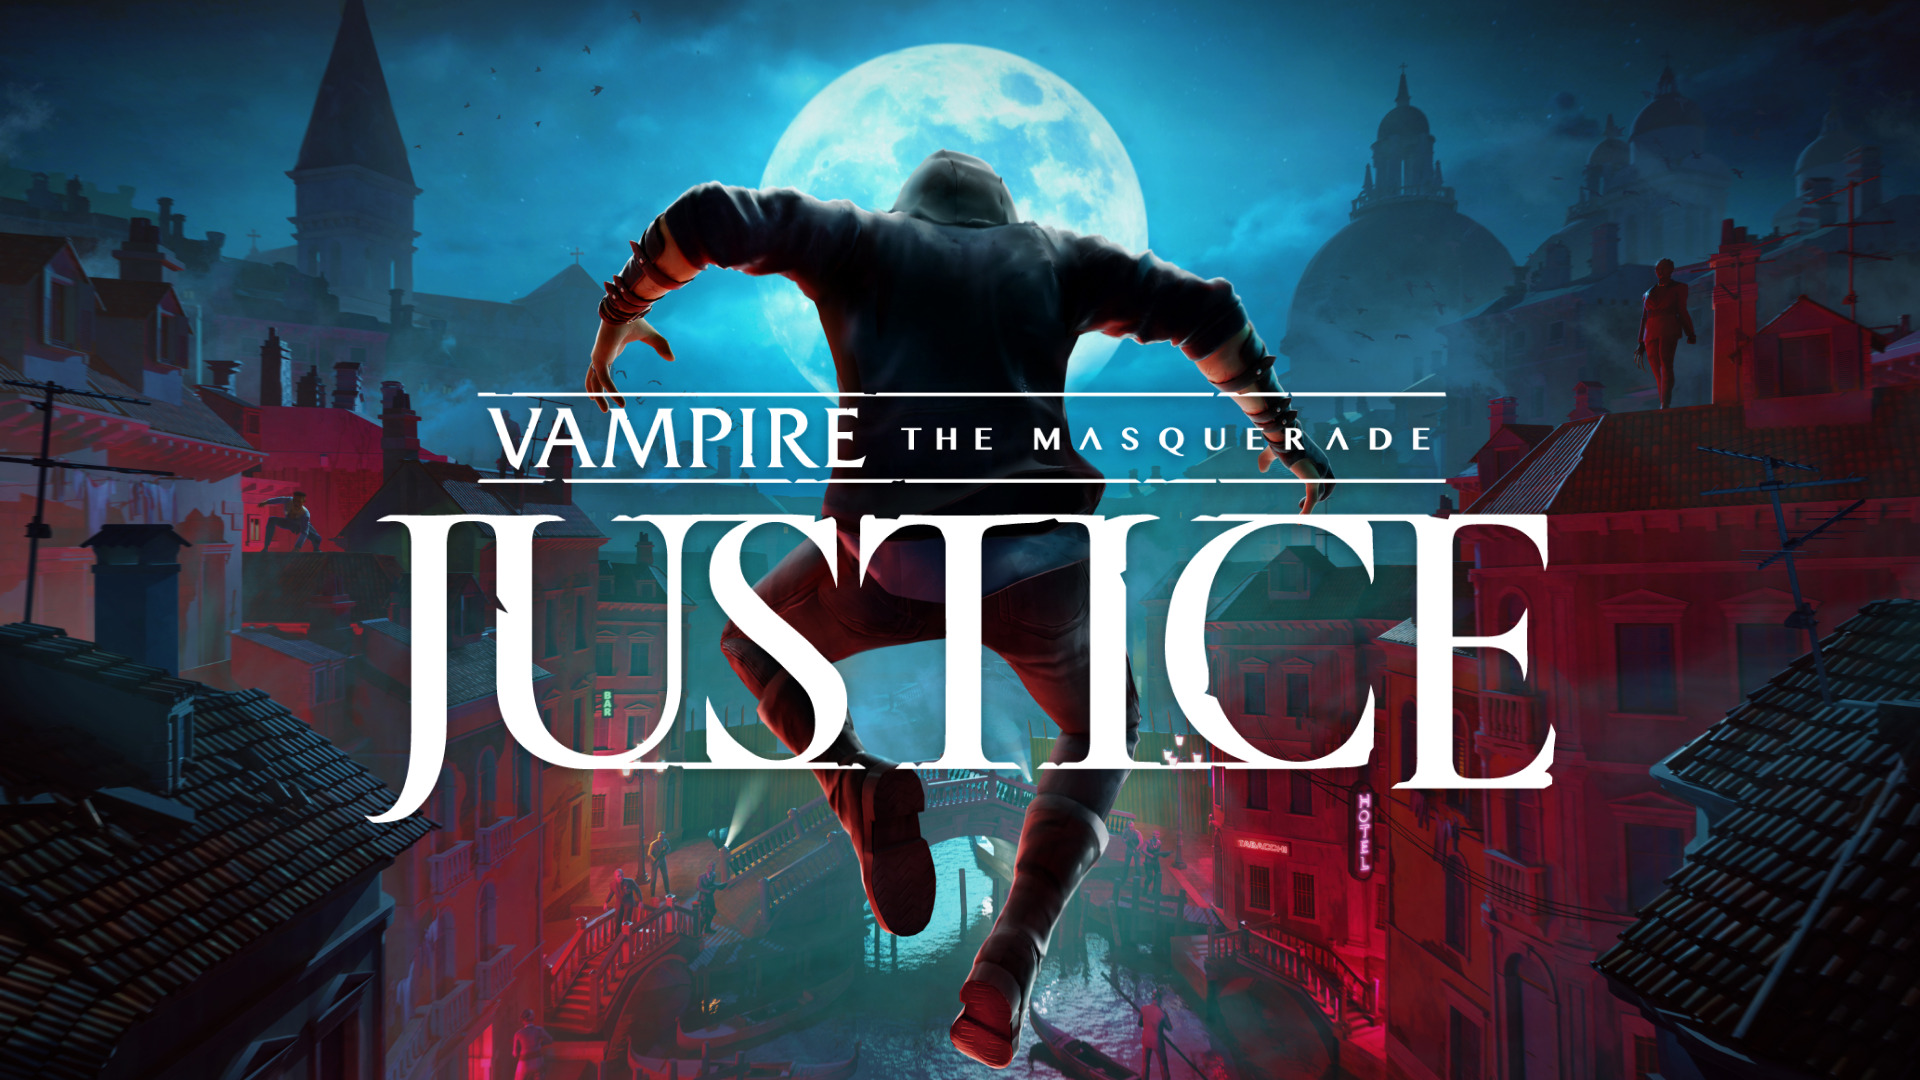 Vampire: The Masquerade - Swansong 'RPG' trailer - Gematsu